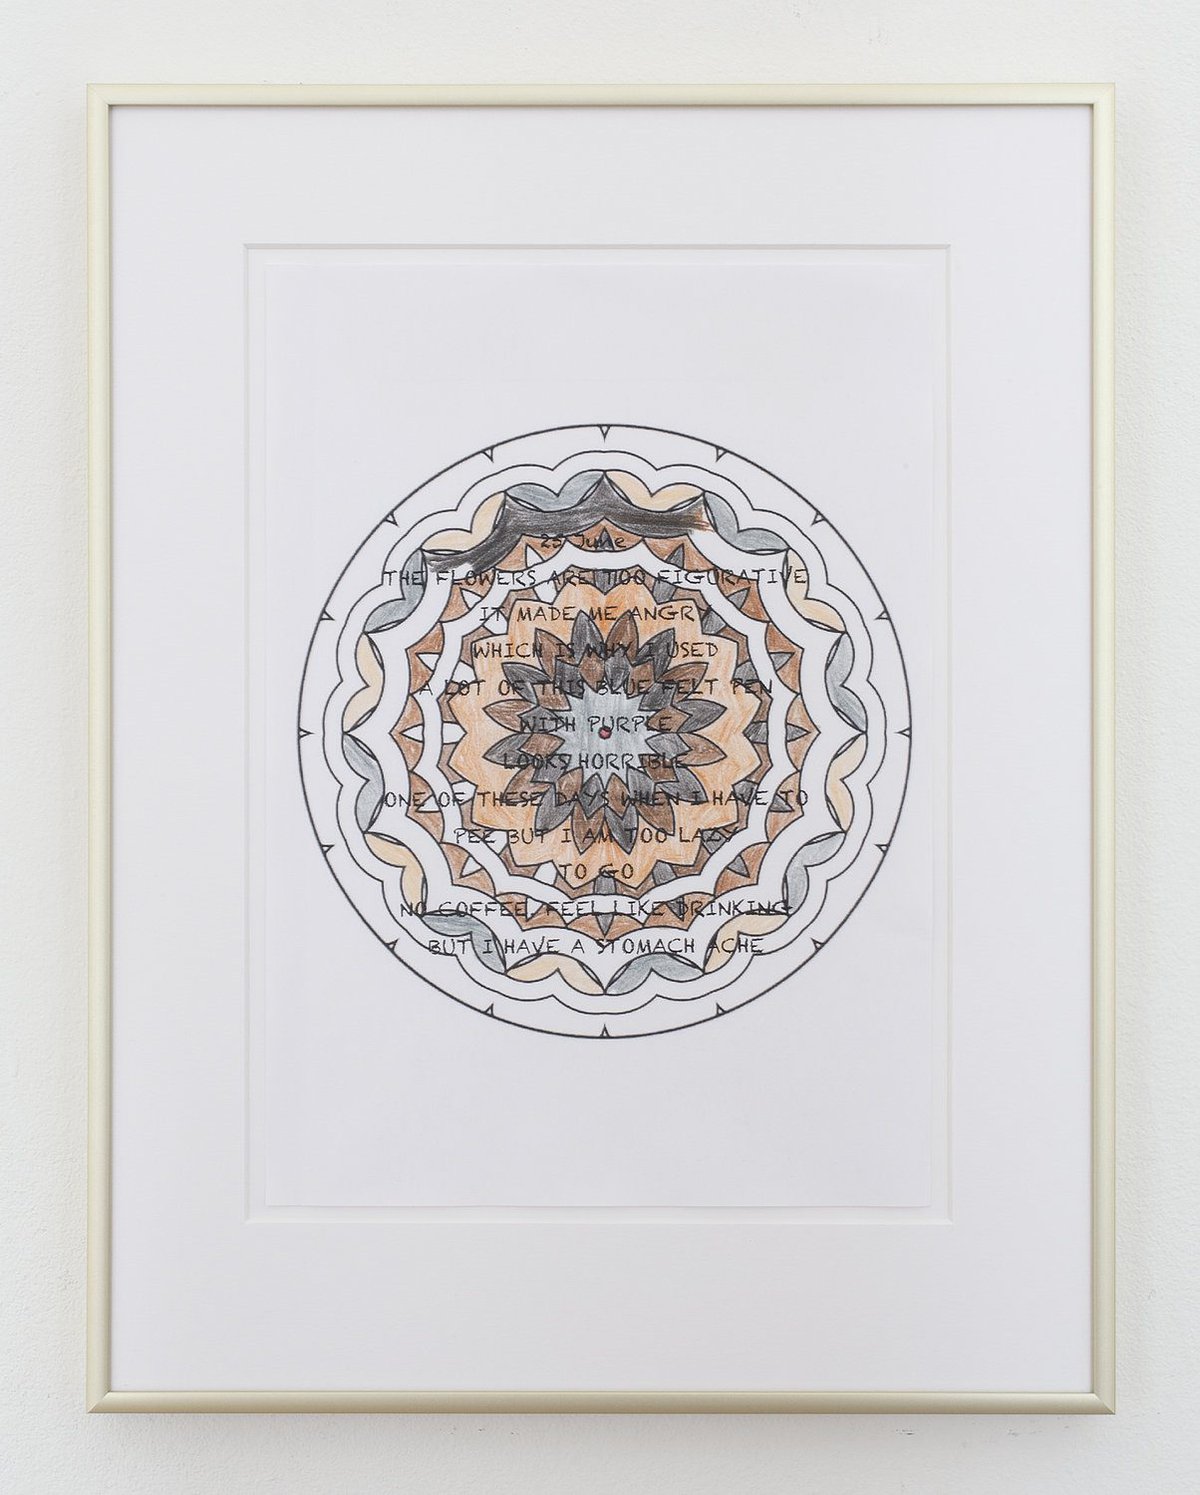 Anna-Sophie Berger 25th june, 2015Highlighter, pencil, inkjet print on paper40 x 30 cm